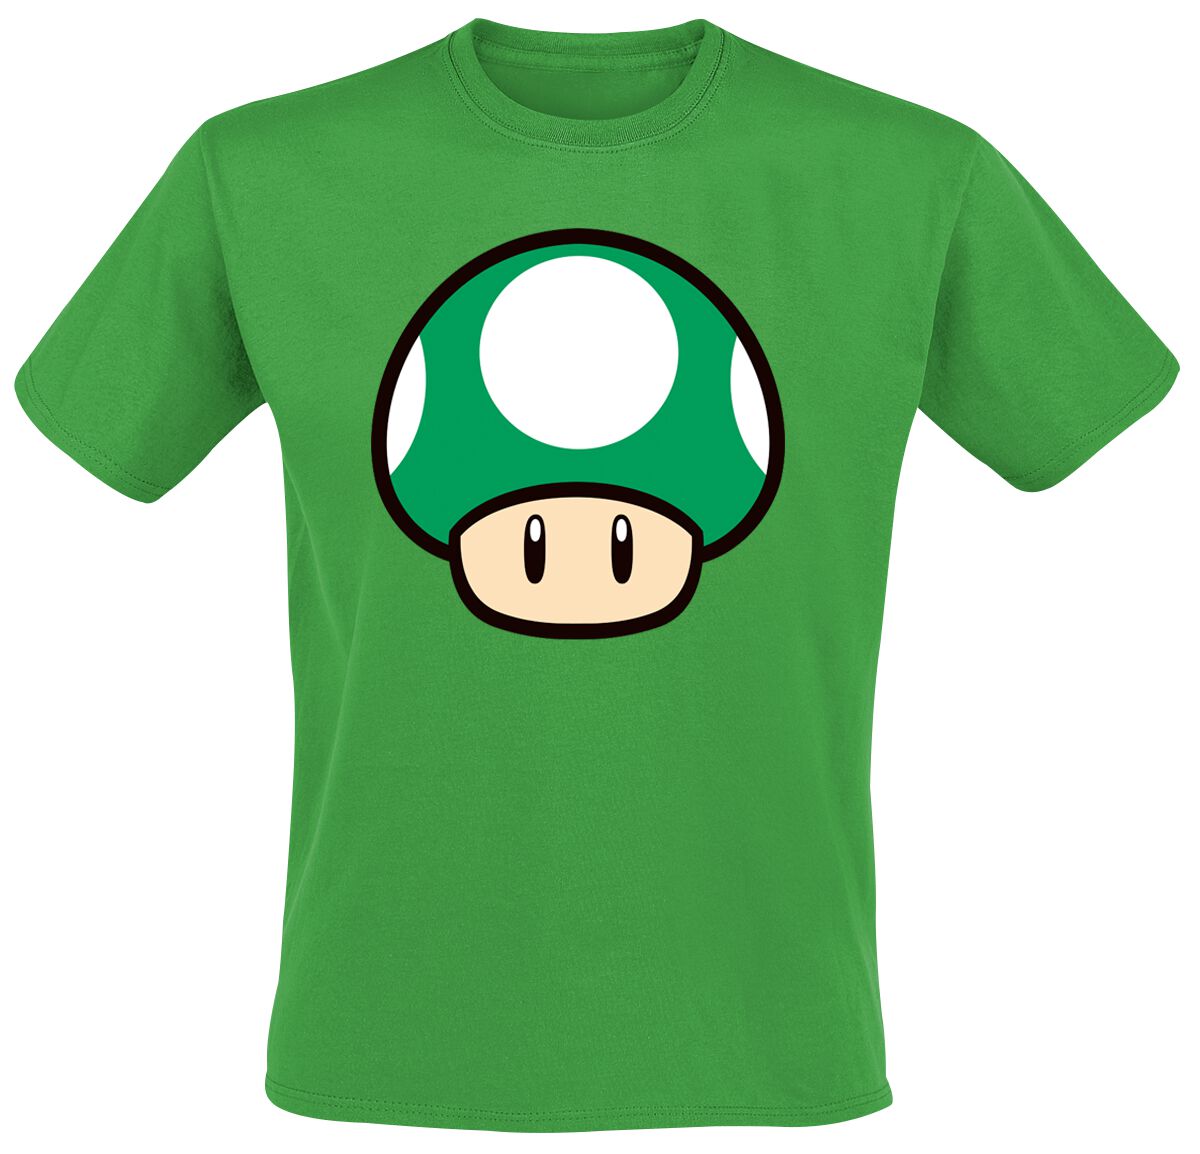 Super Mario Mushroom T-Shirt grün in XL von Super Mario